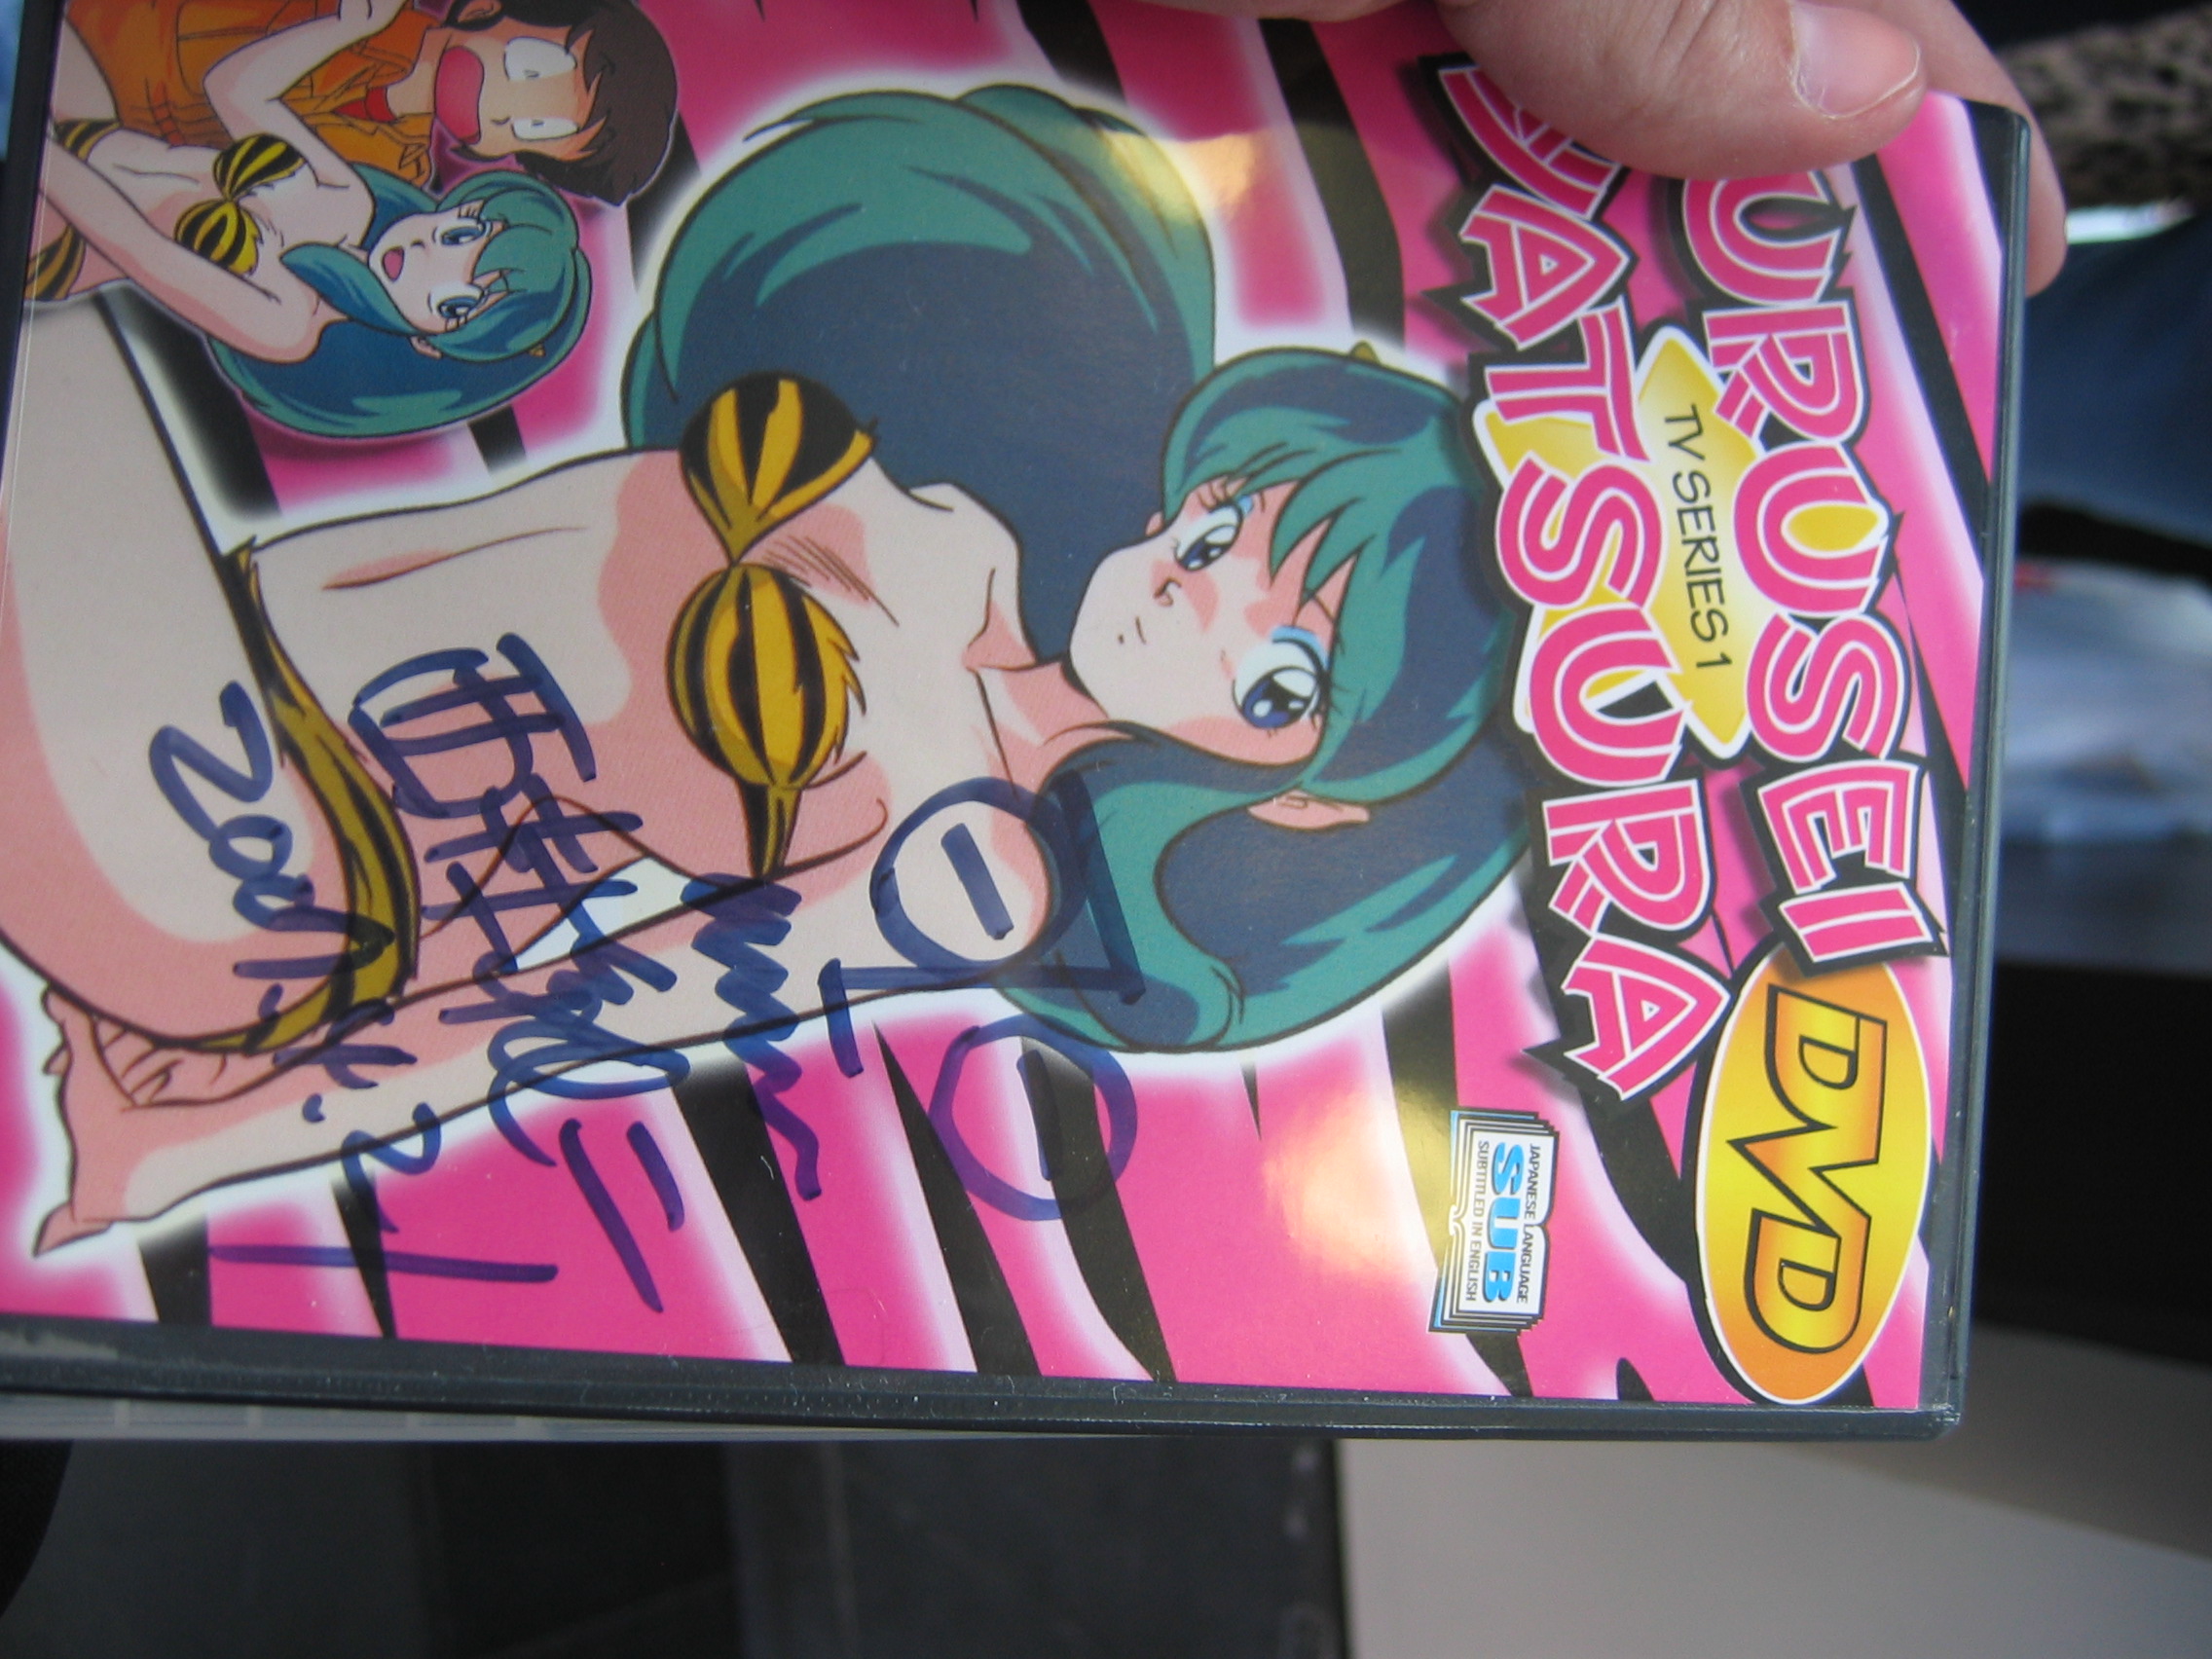 My now signed copy of Urusei Yatsura: Volume 1